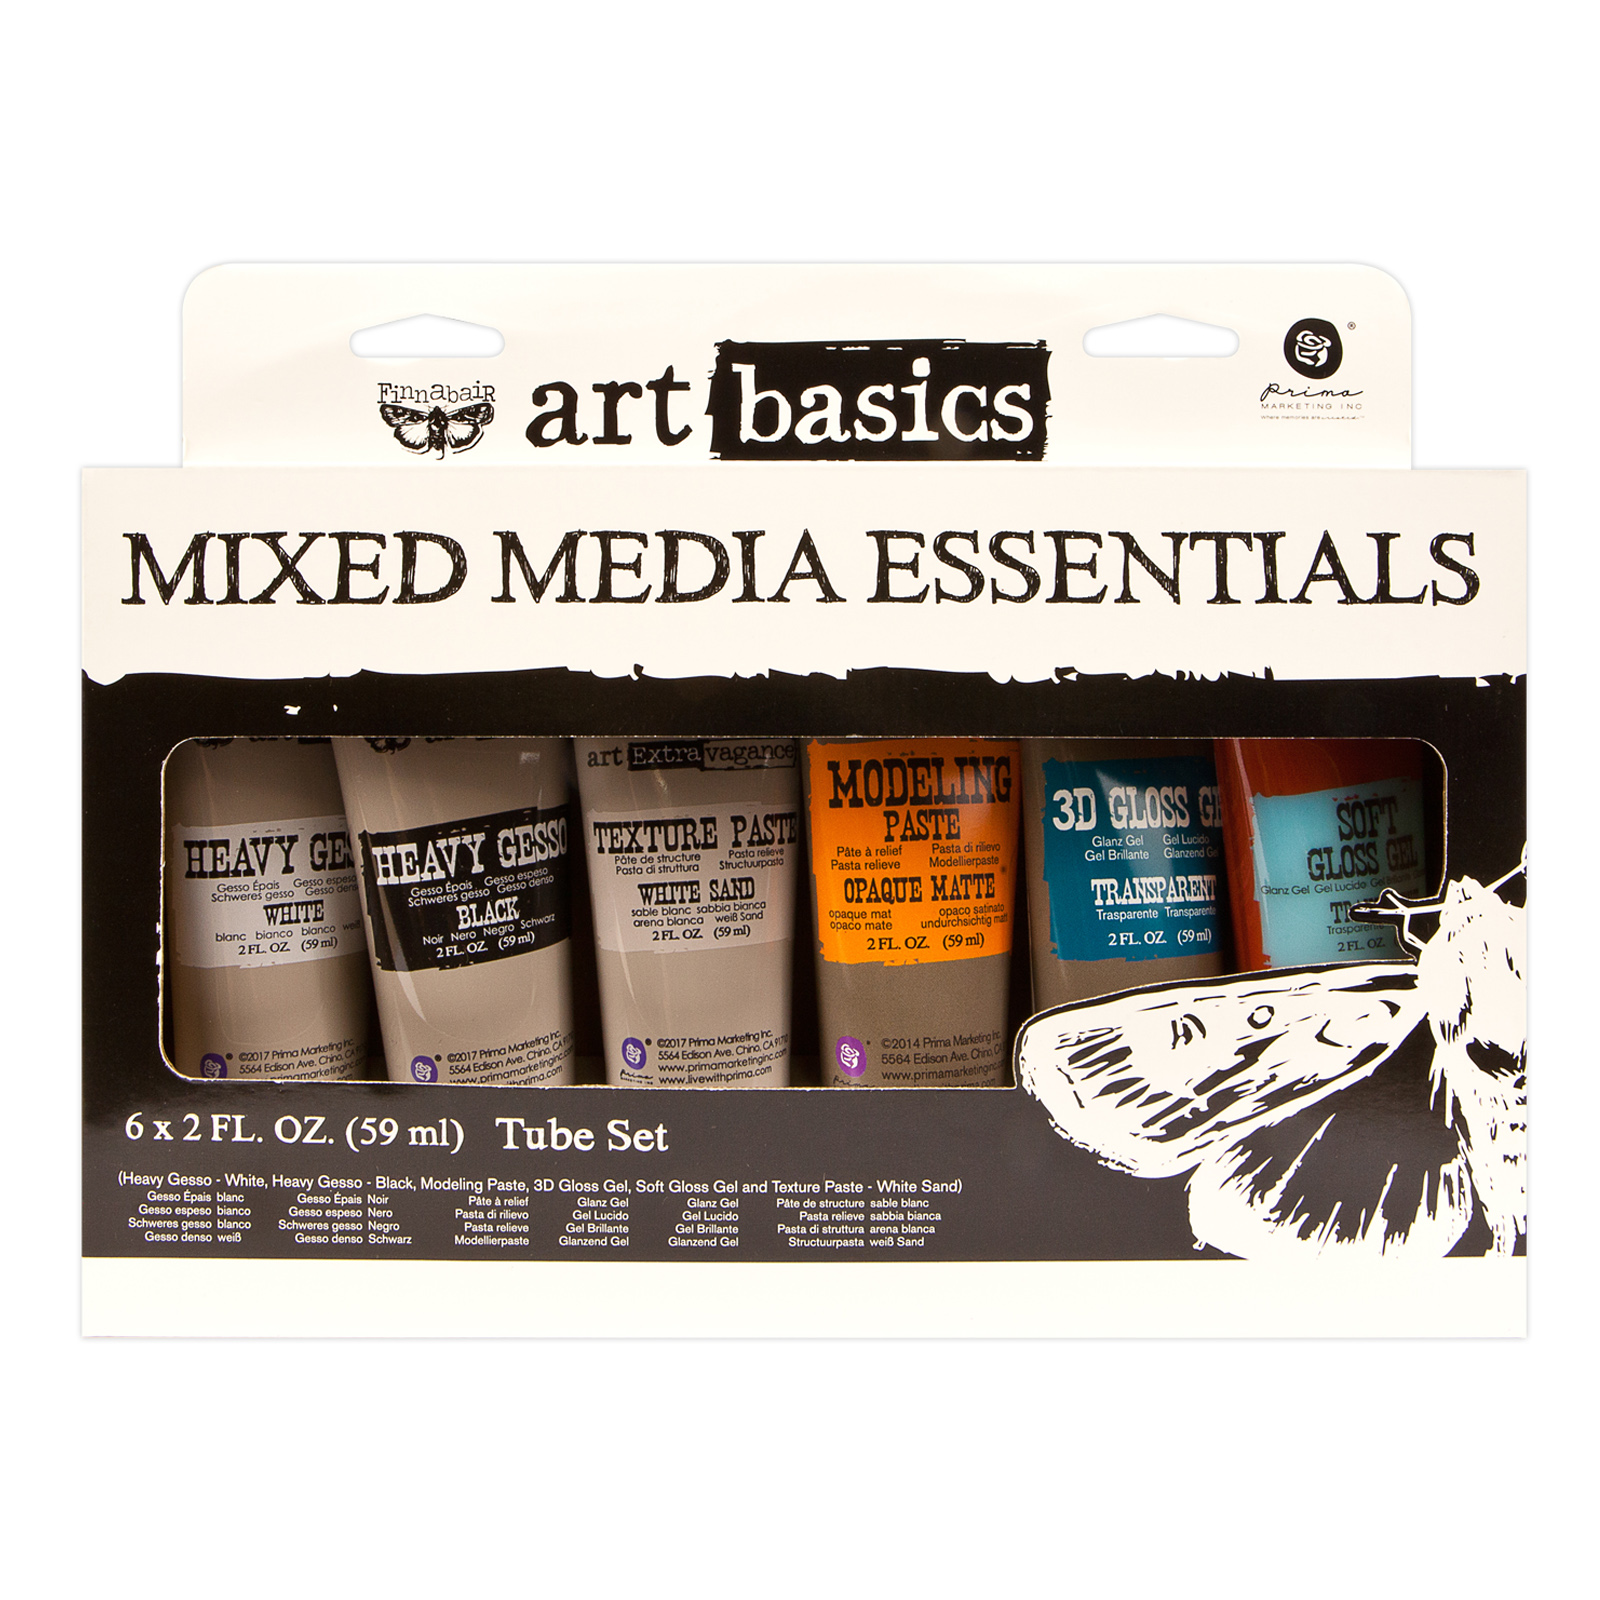 http://www.michaels.com/finnabair-art-basics-mixed-media-essentials/10520526.html